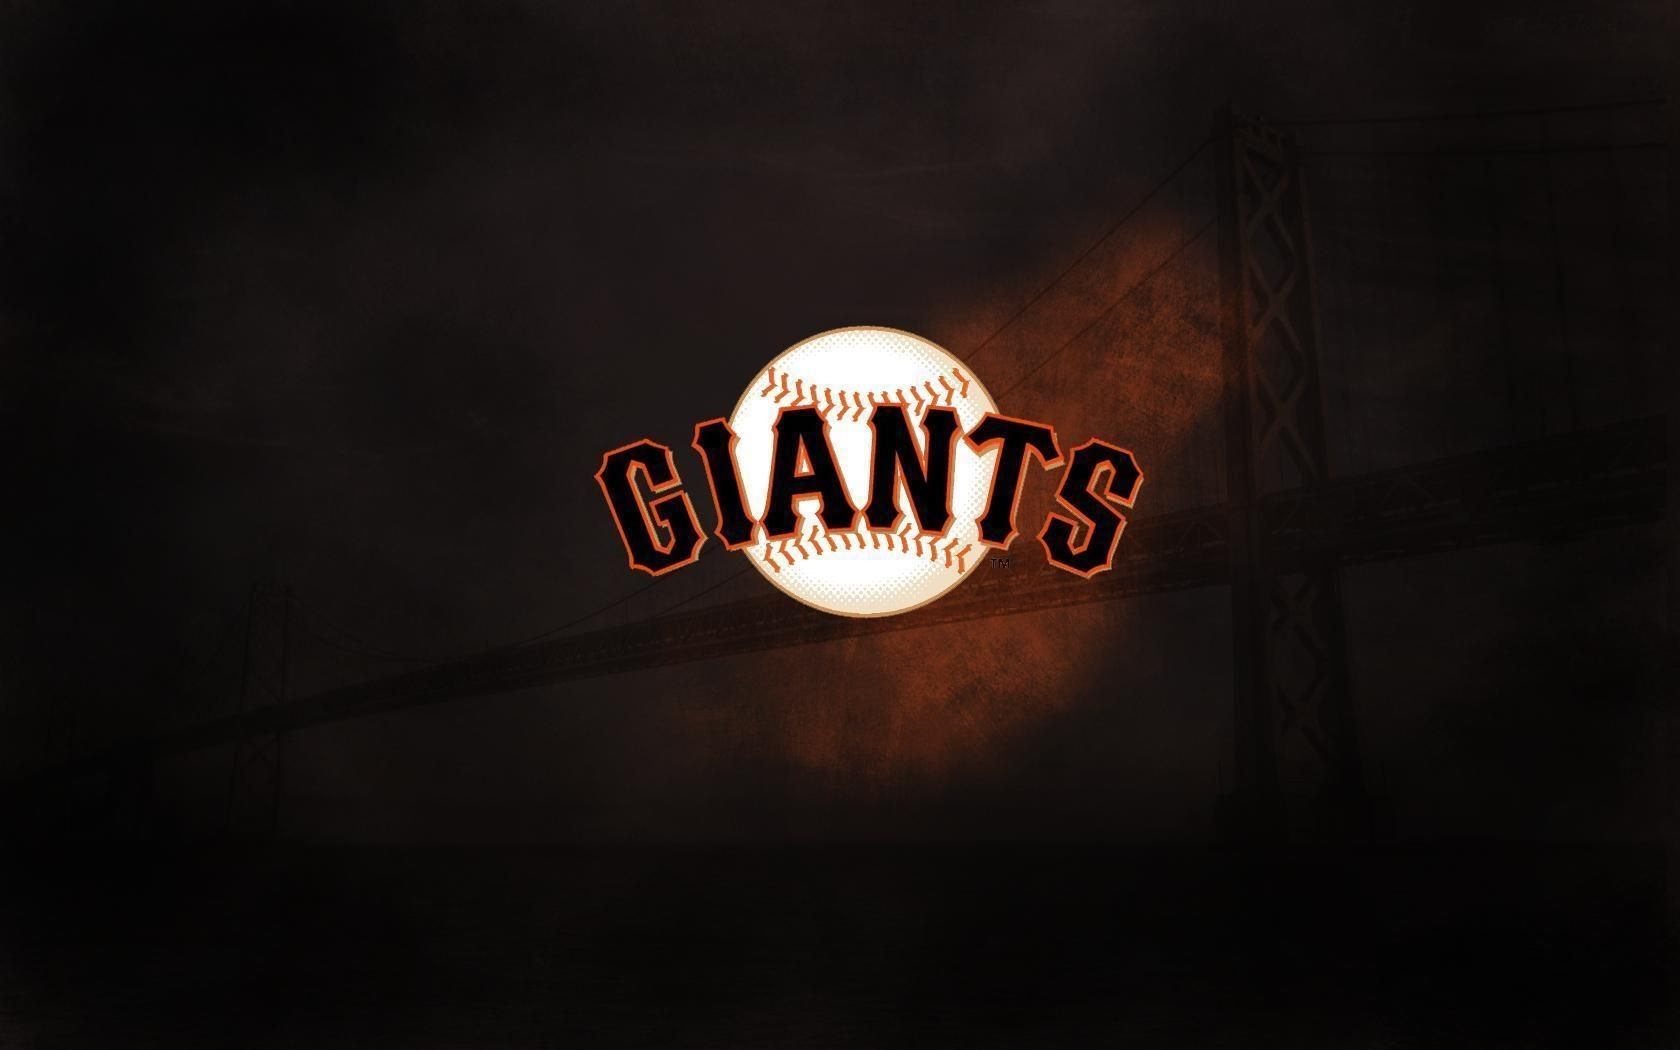 Top San Francisco Giants Logo Wallpaper FULL HD 1080p For PC Background. San francisco giants logo, Sf giants logo, Sf giants